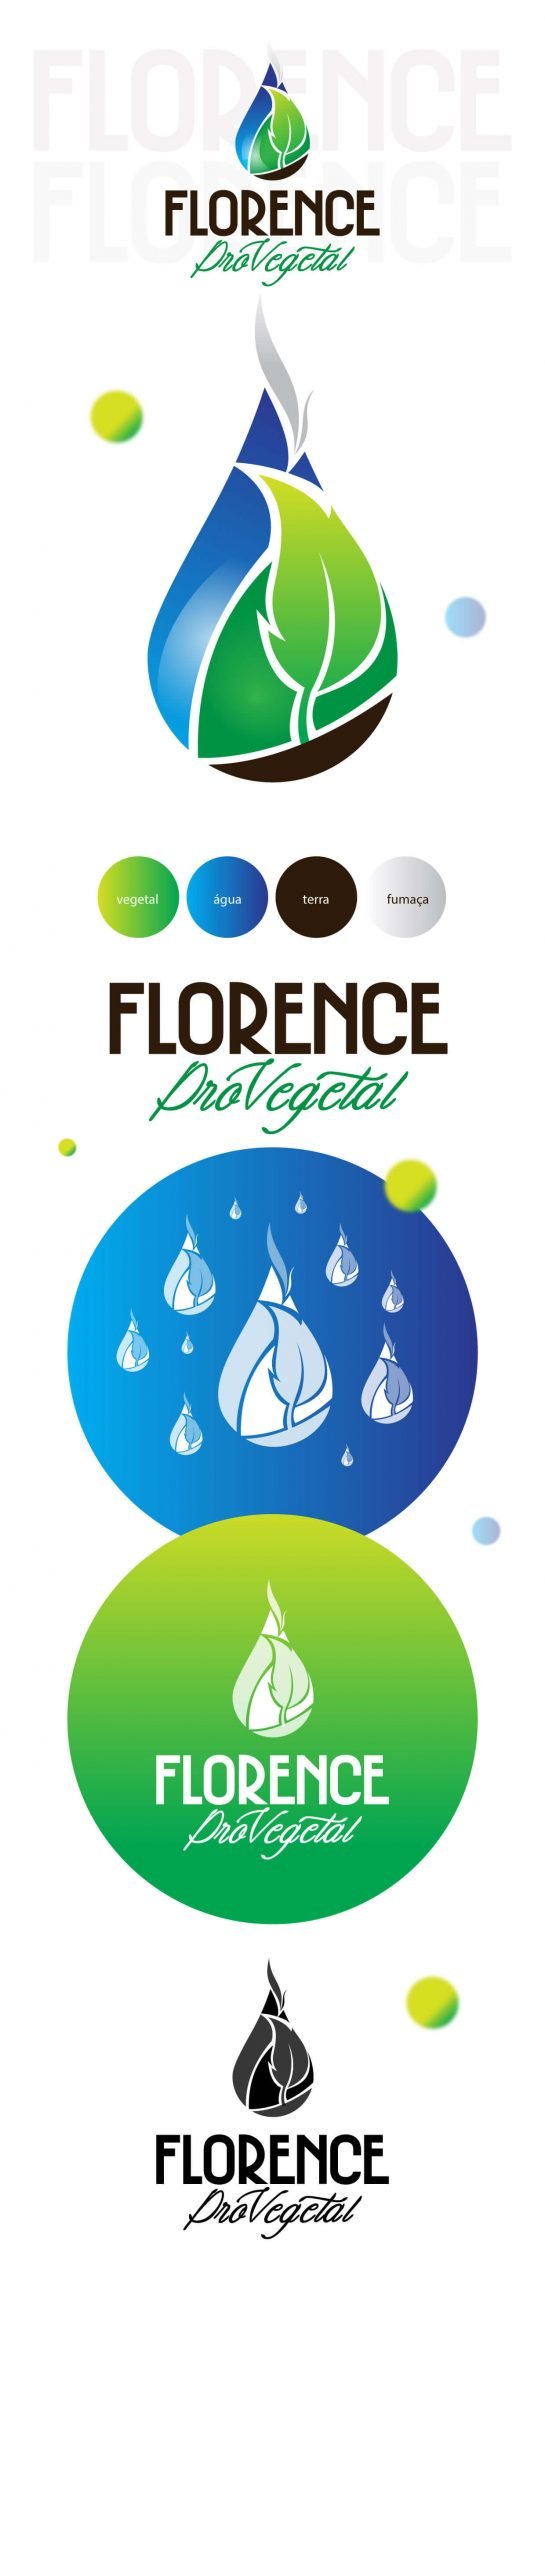 Florence pro vegetal logo scaled